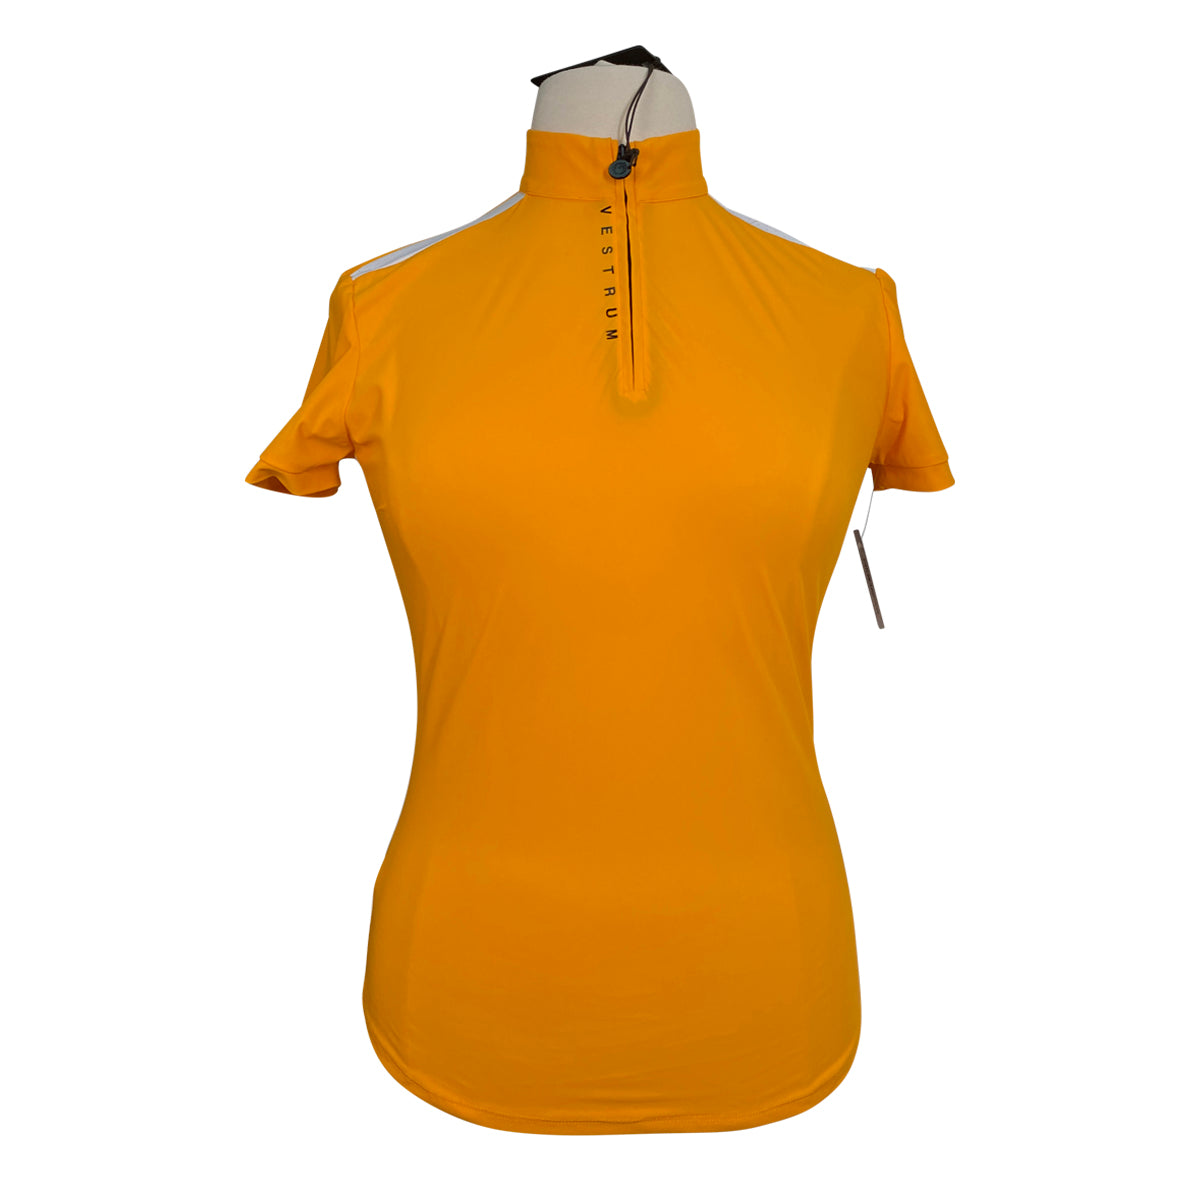 Vestrum 'Portici' S/S Training Shirt in Orange Sherbert